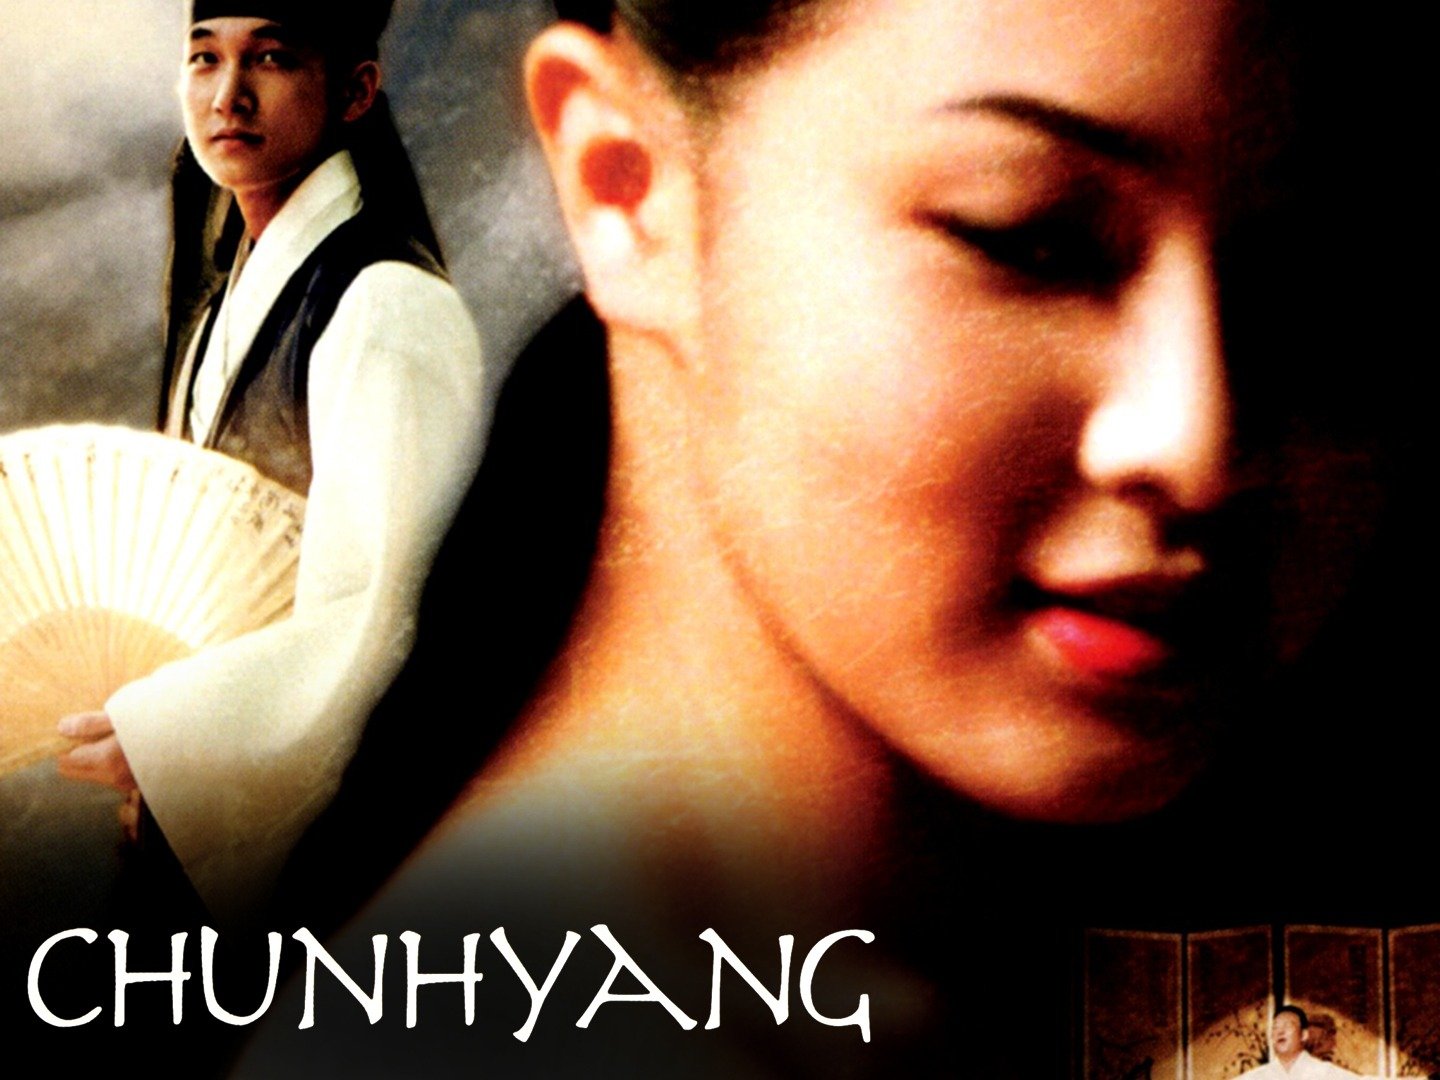 Chunhyang (2000) - Rotten Tomatoes